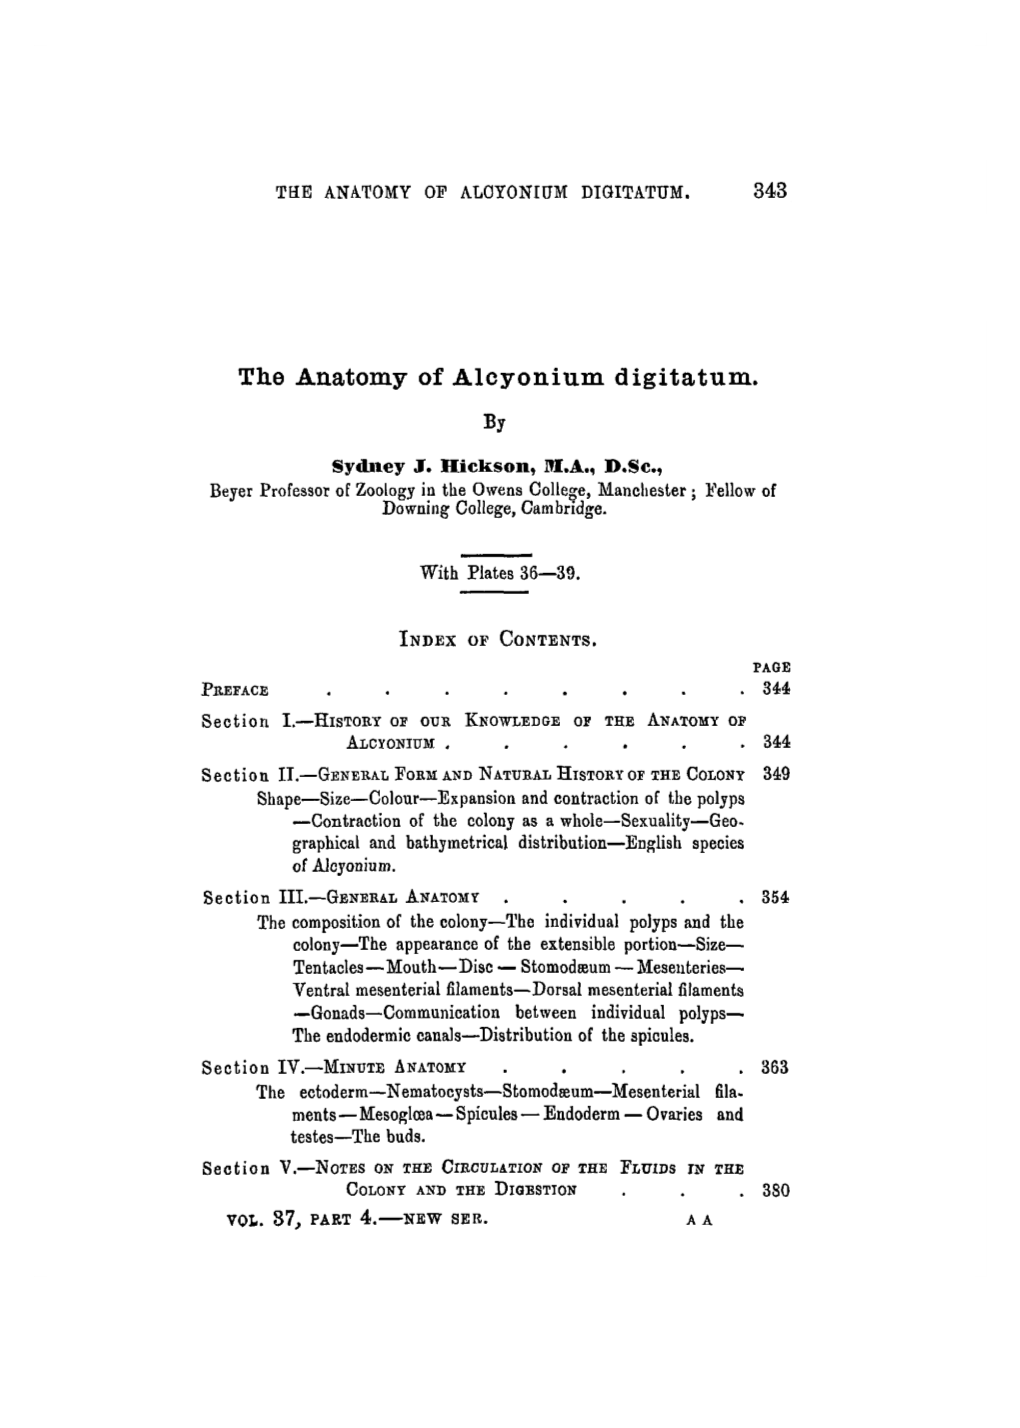 The Anatomy of Alcyonium Digitatum. by Sydney J